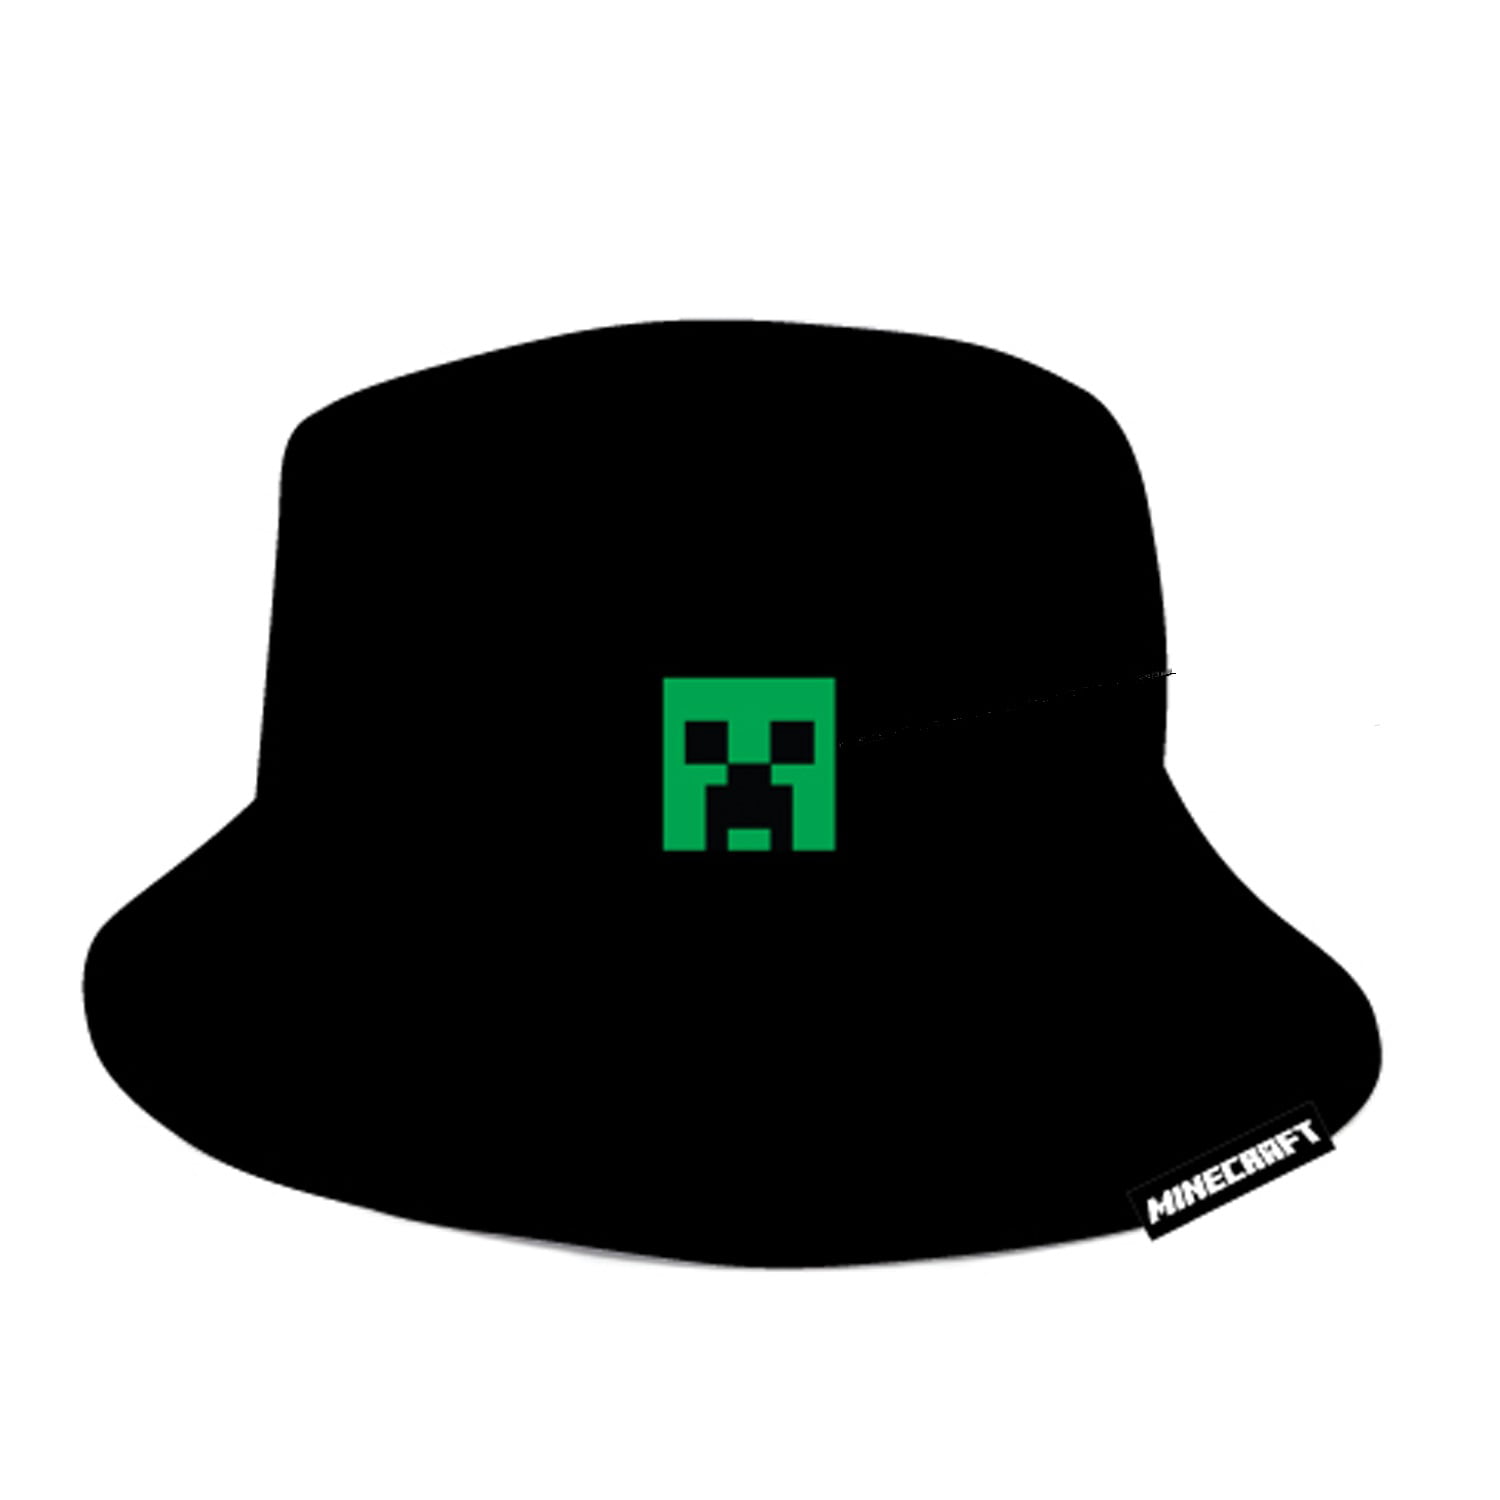 Minecraft hats. Шляпа майнкрафт. Шлёпа из ма. Ковбойская шляпа майнкрафт. Шляпы на скинах в Майне.